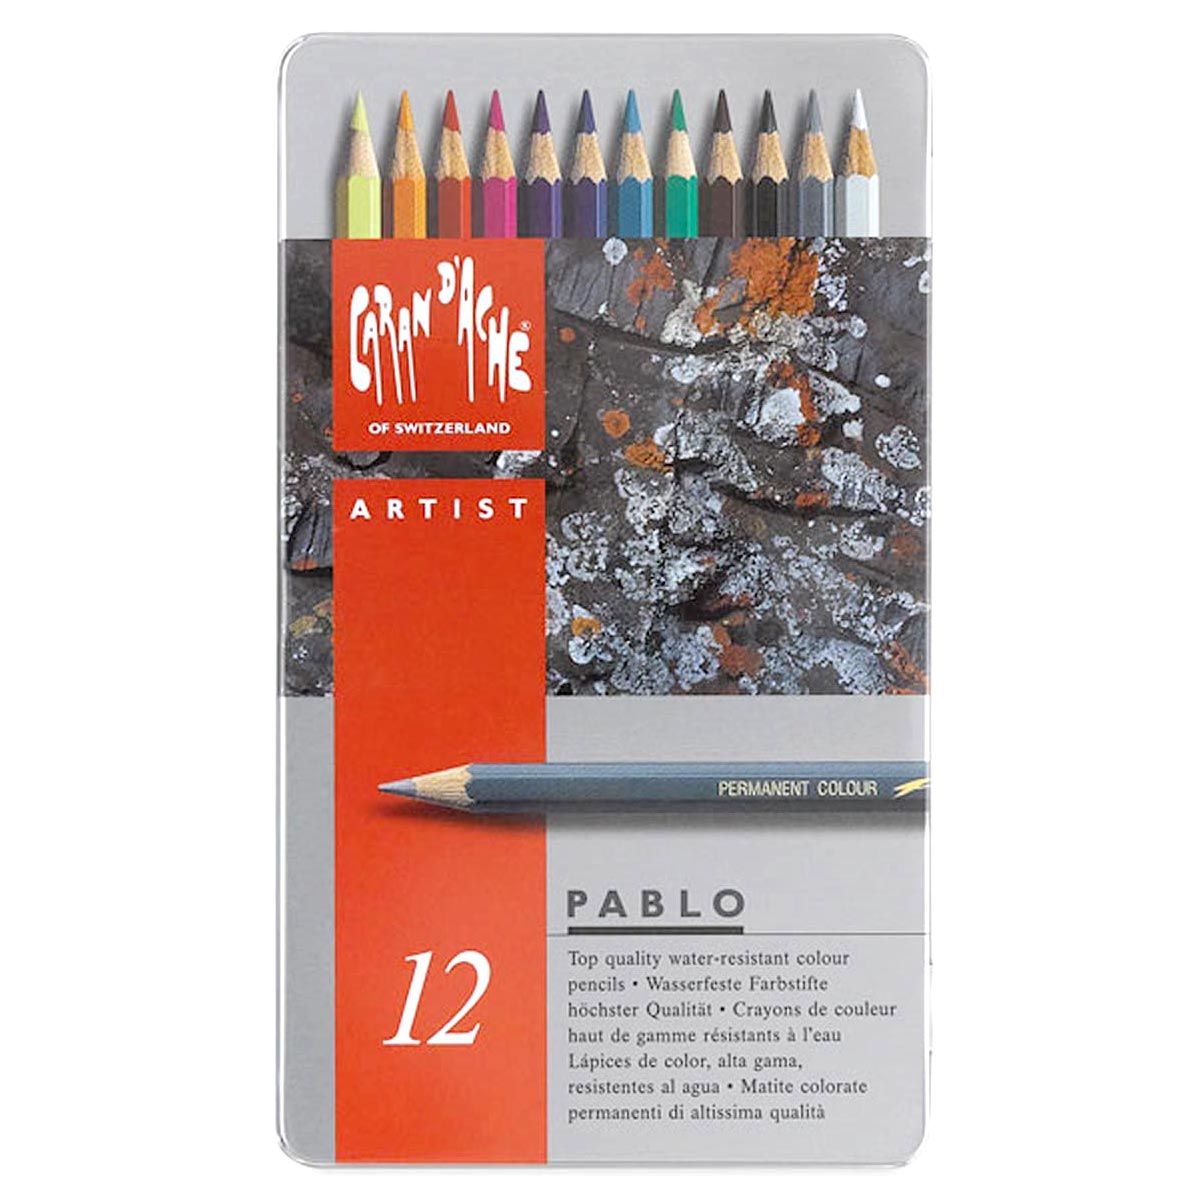 Caran d’Ache Pablo Coloured Pencil Metal Box Set of 12